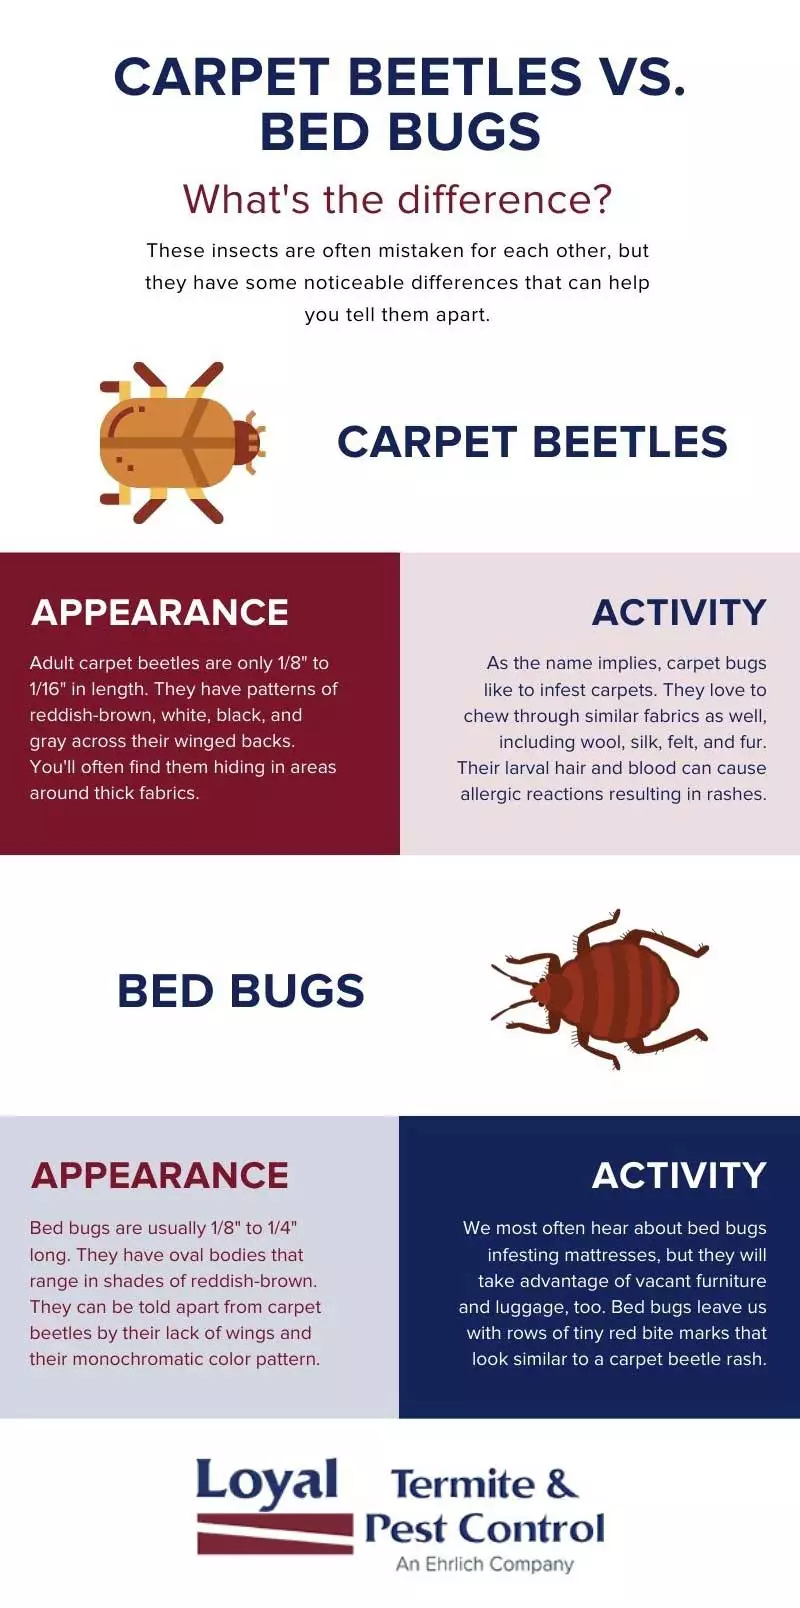 https://www.loyalpest.com/wp-content/uploads/2021/05/carpet-beetle-vs-bed-bug-infographic-loyal.jpg